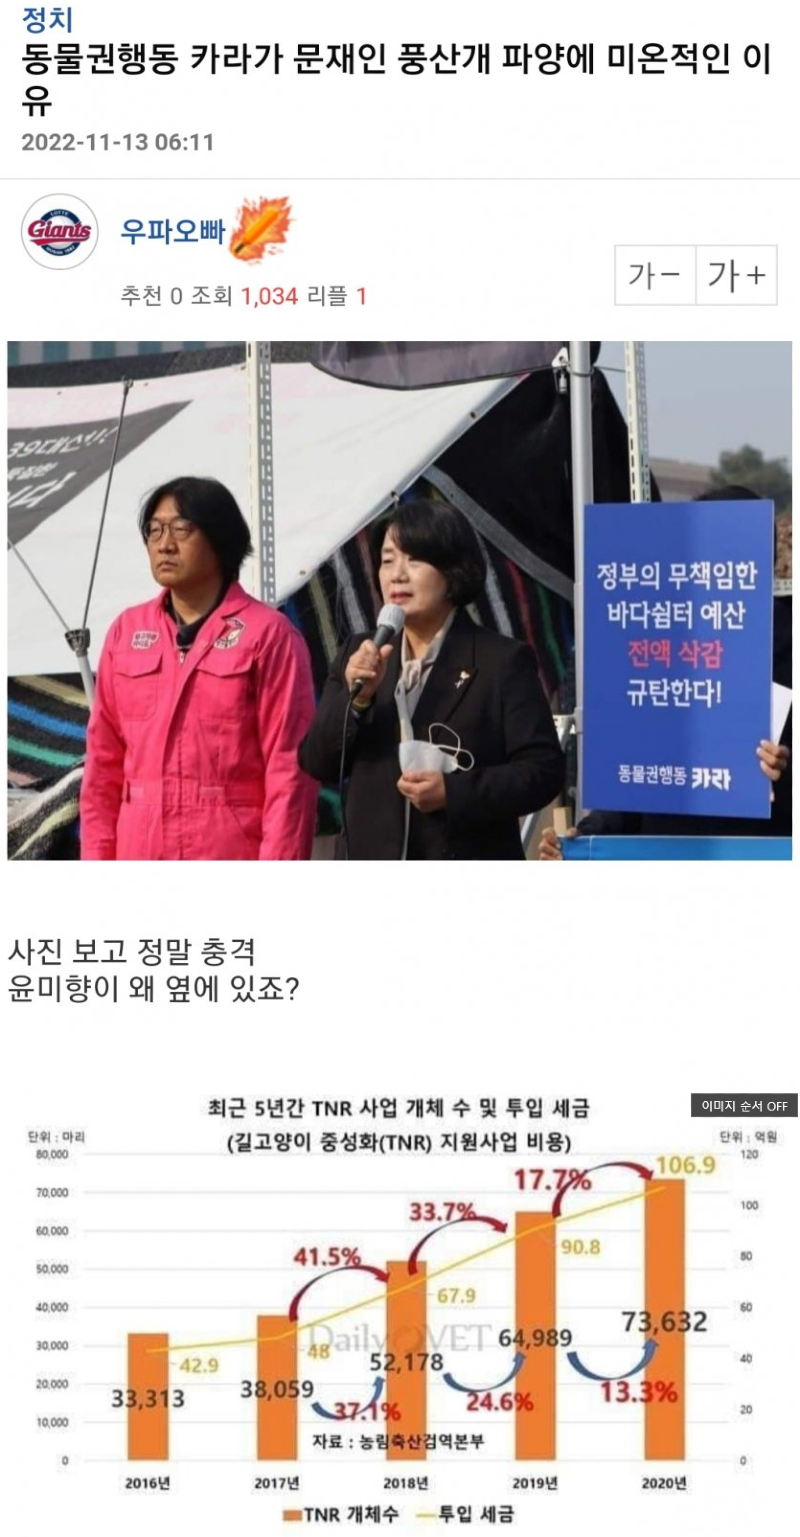 Screenshot 2023-01-22 at 18-52-06 윤미향 근황ㄷㄷㄷㄷㄷ - 실시간 베스트 갤러리.png